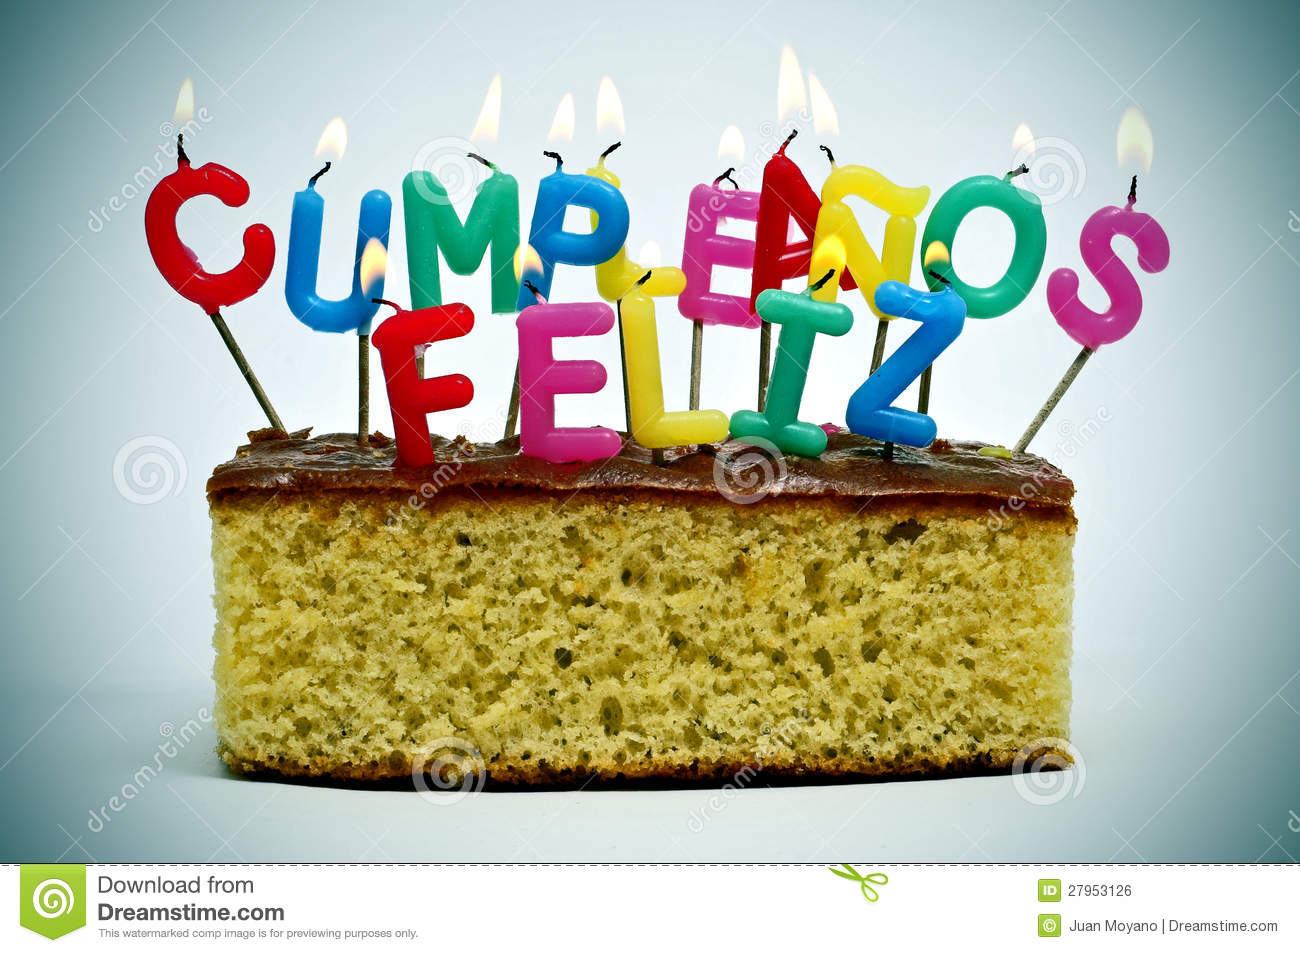 Cumpleanos Feliz Happy Birthday In Spanish Royalty Free Stock Image